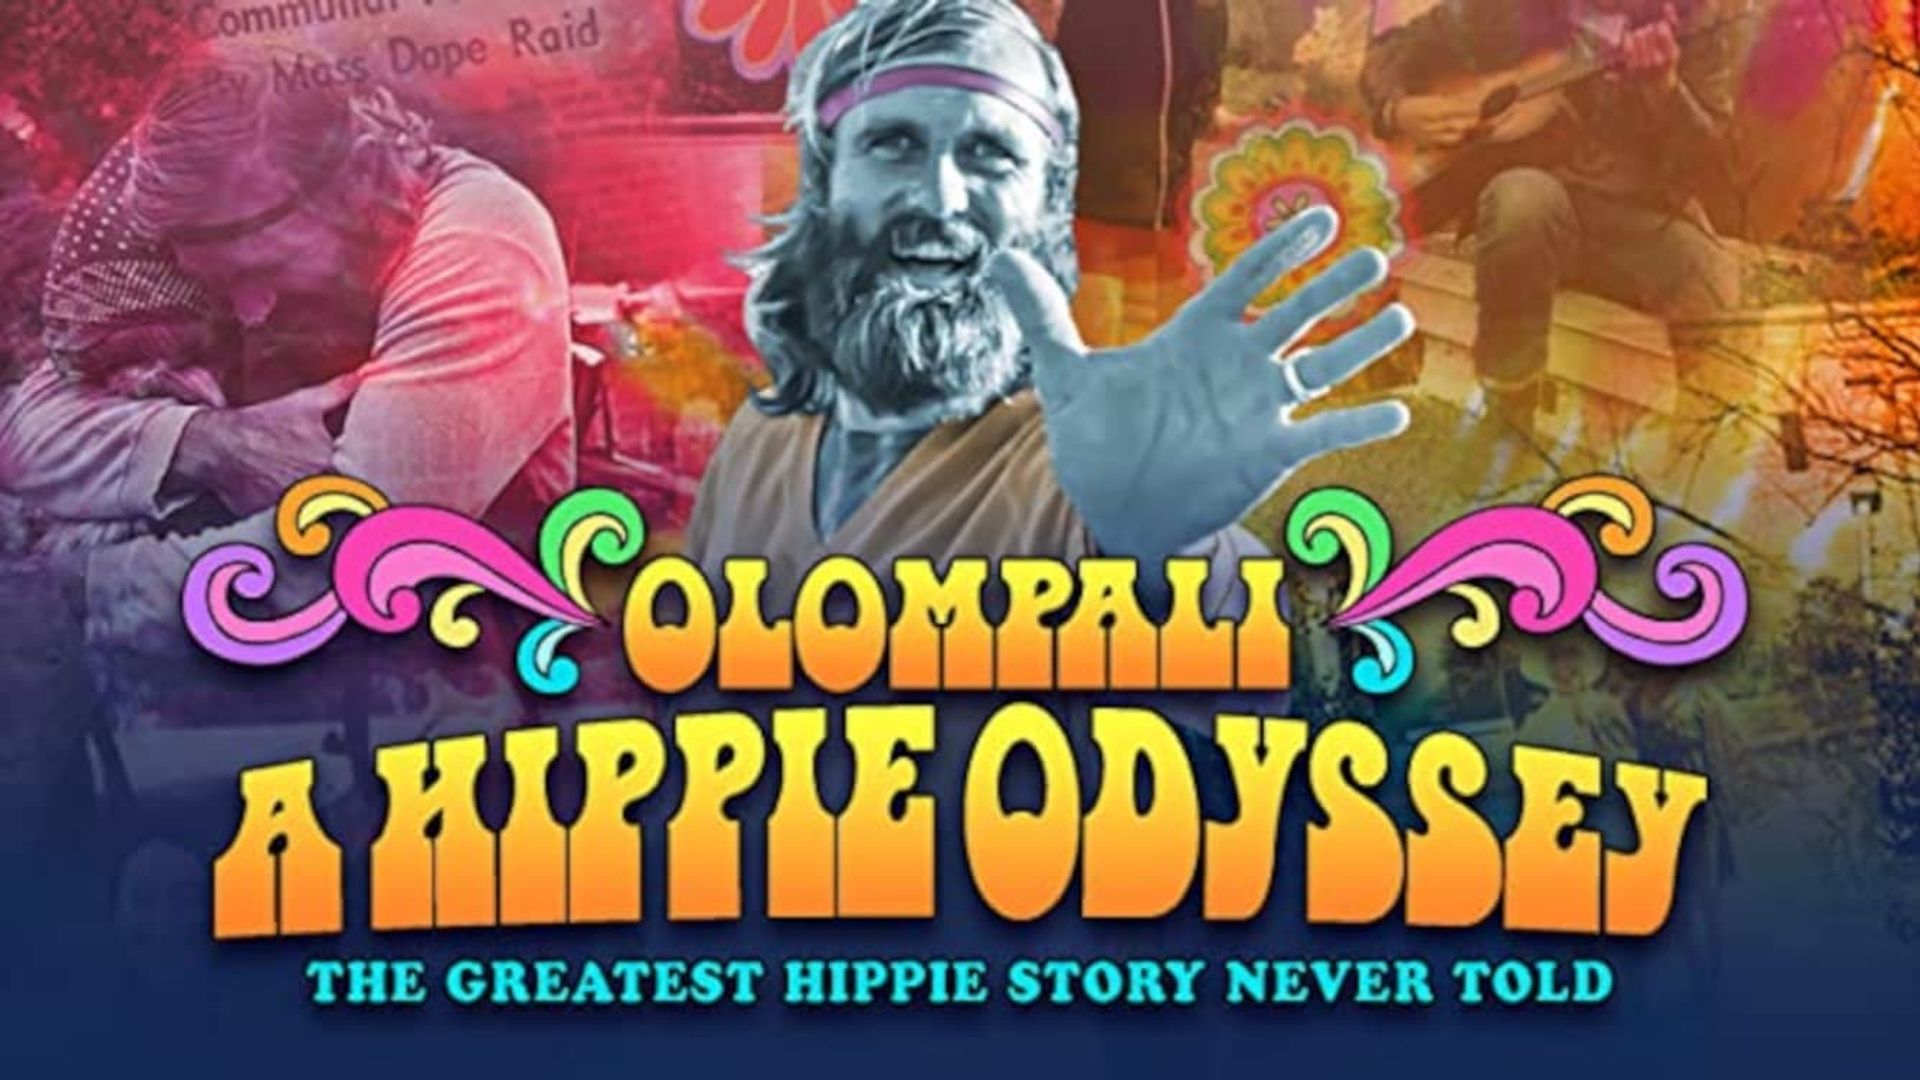 Olompali: A Hippie Odyssey background